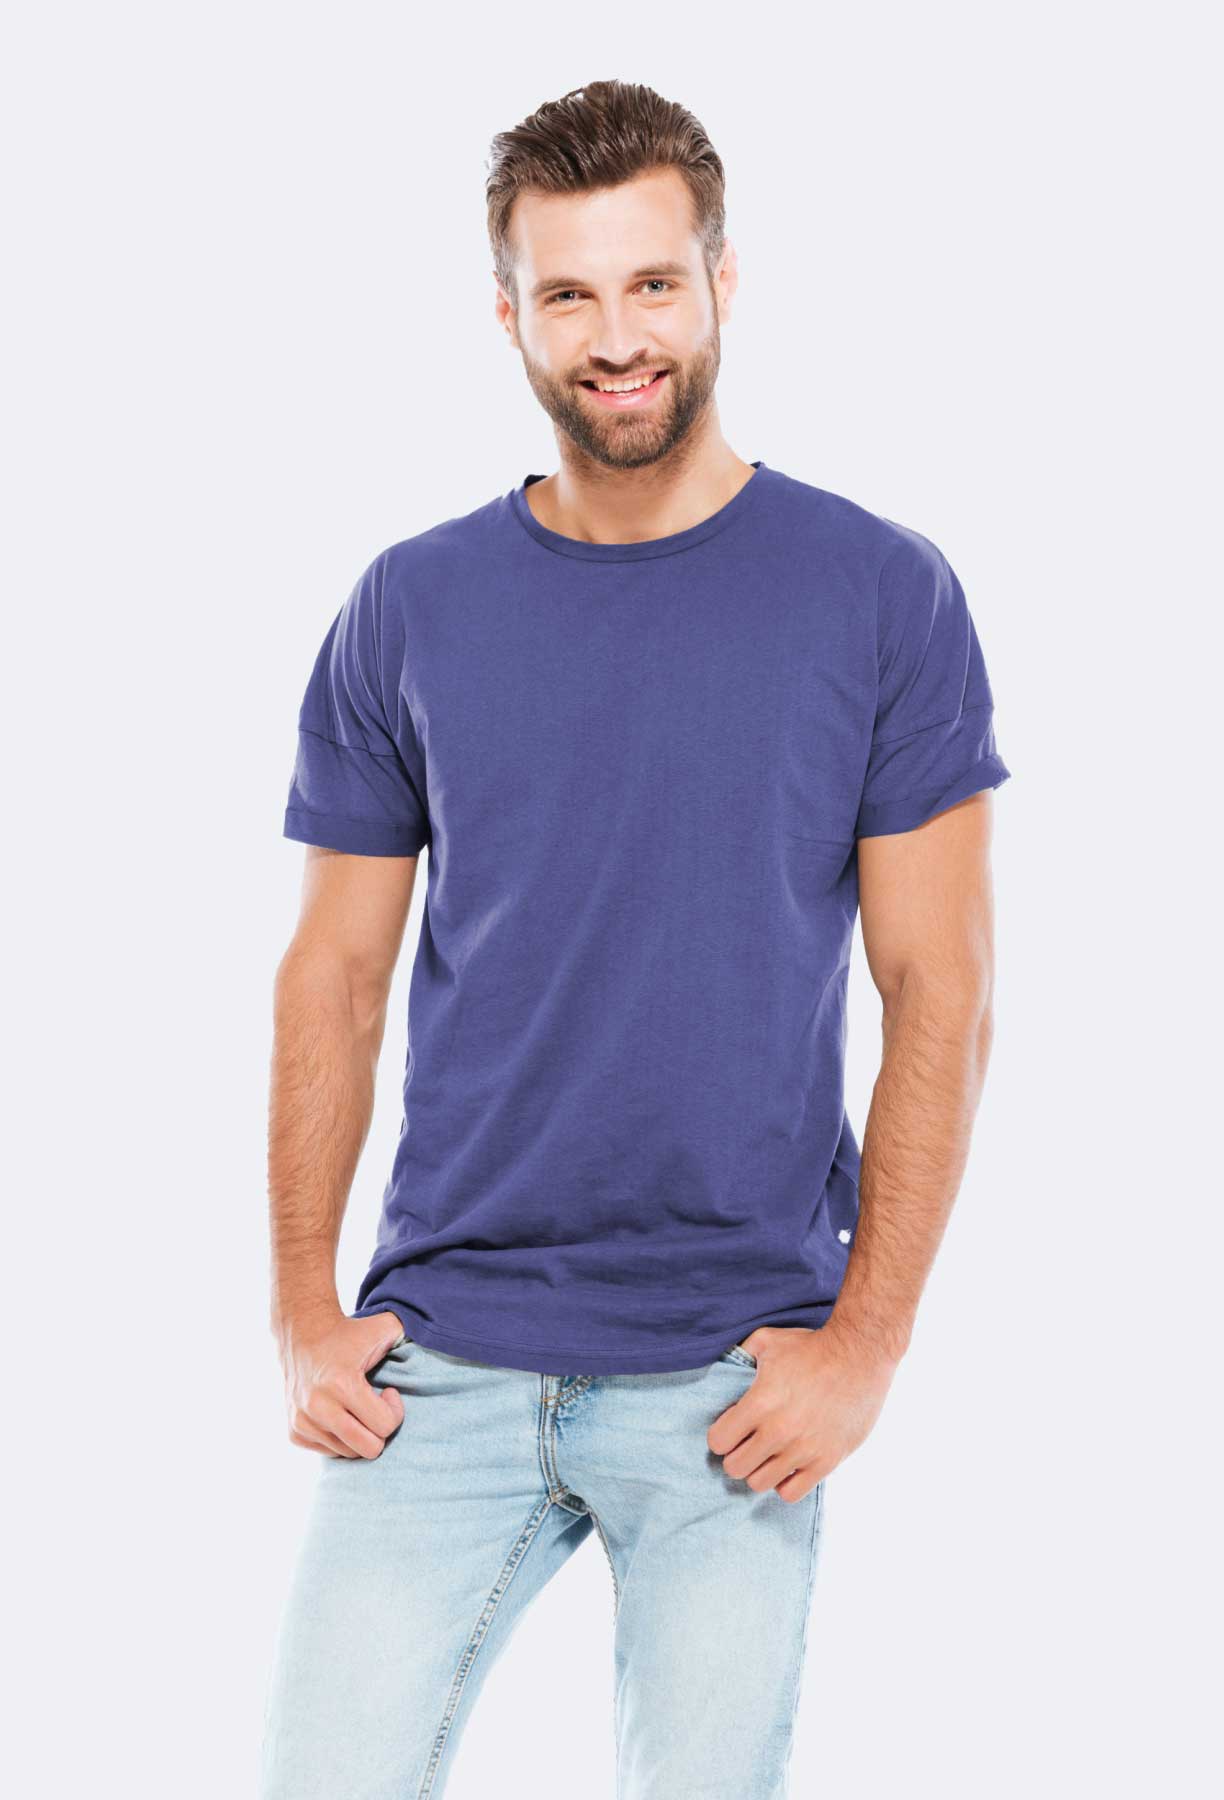 Olive Solid Color Cotton Round Neck T-shirt for Men